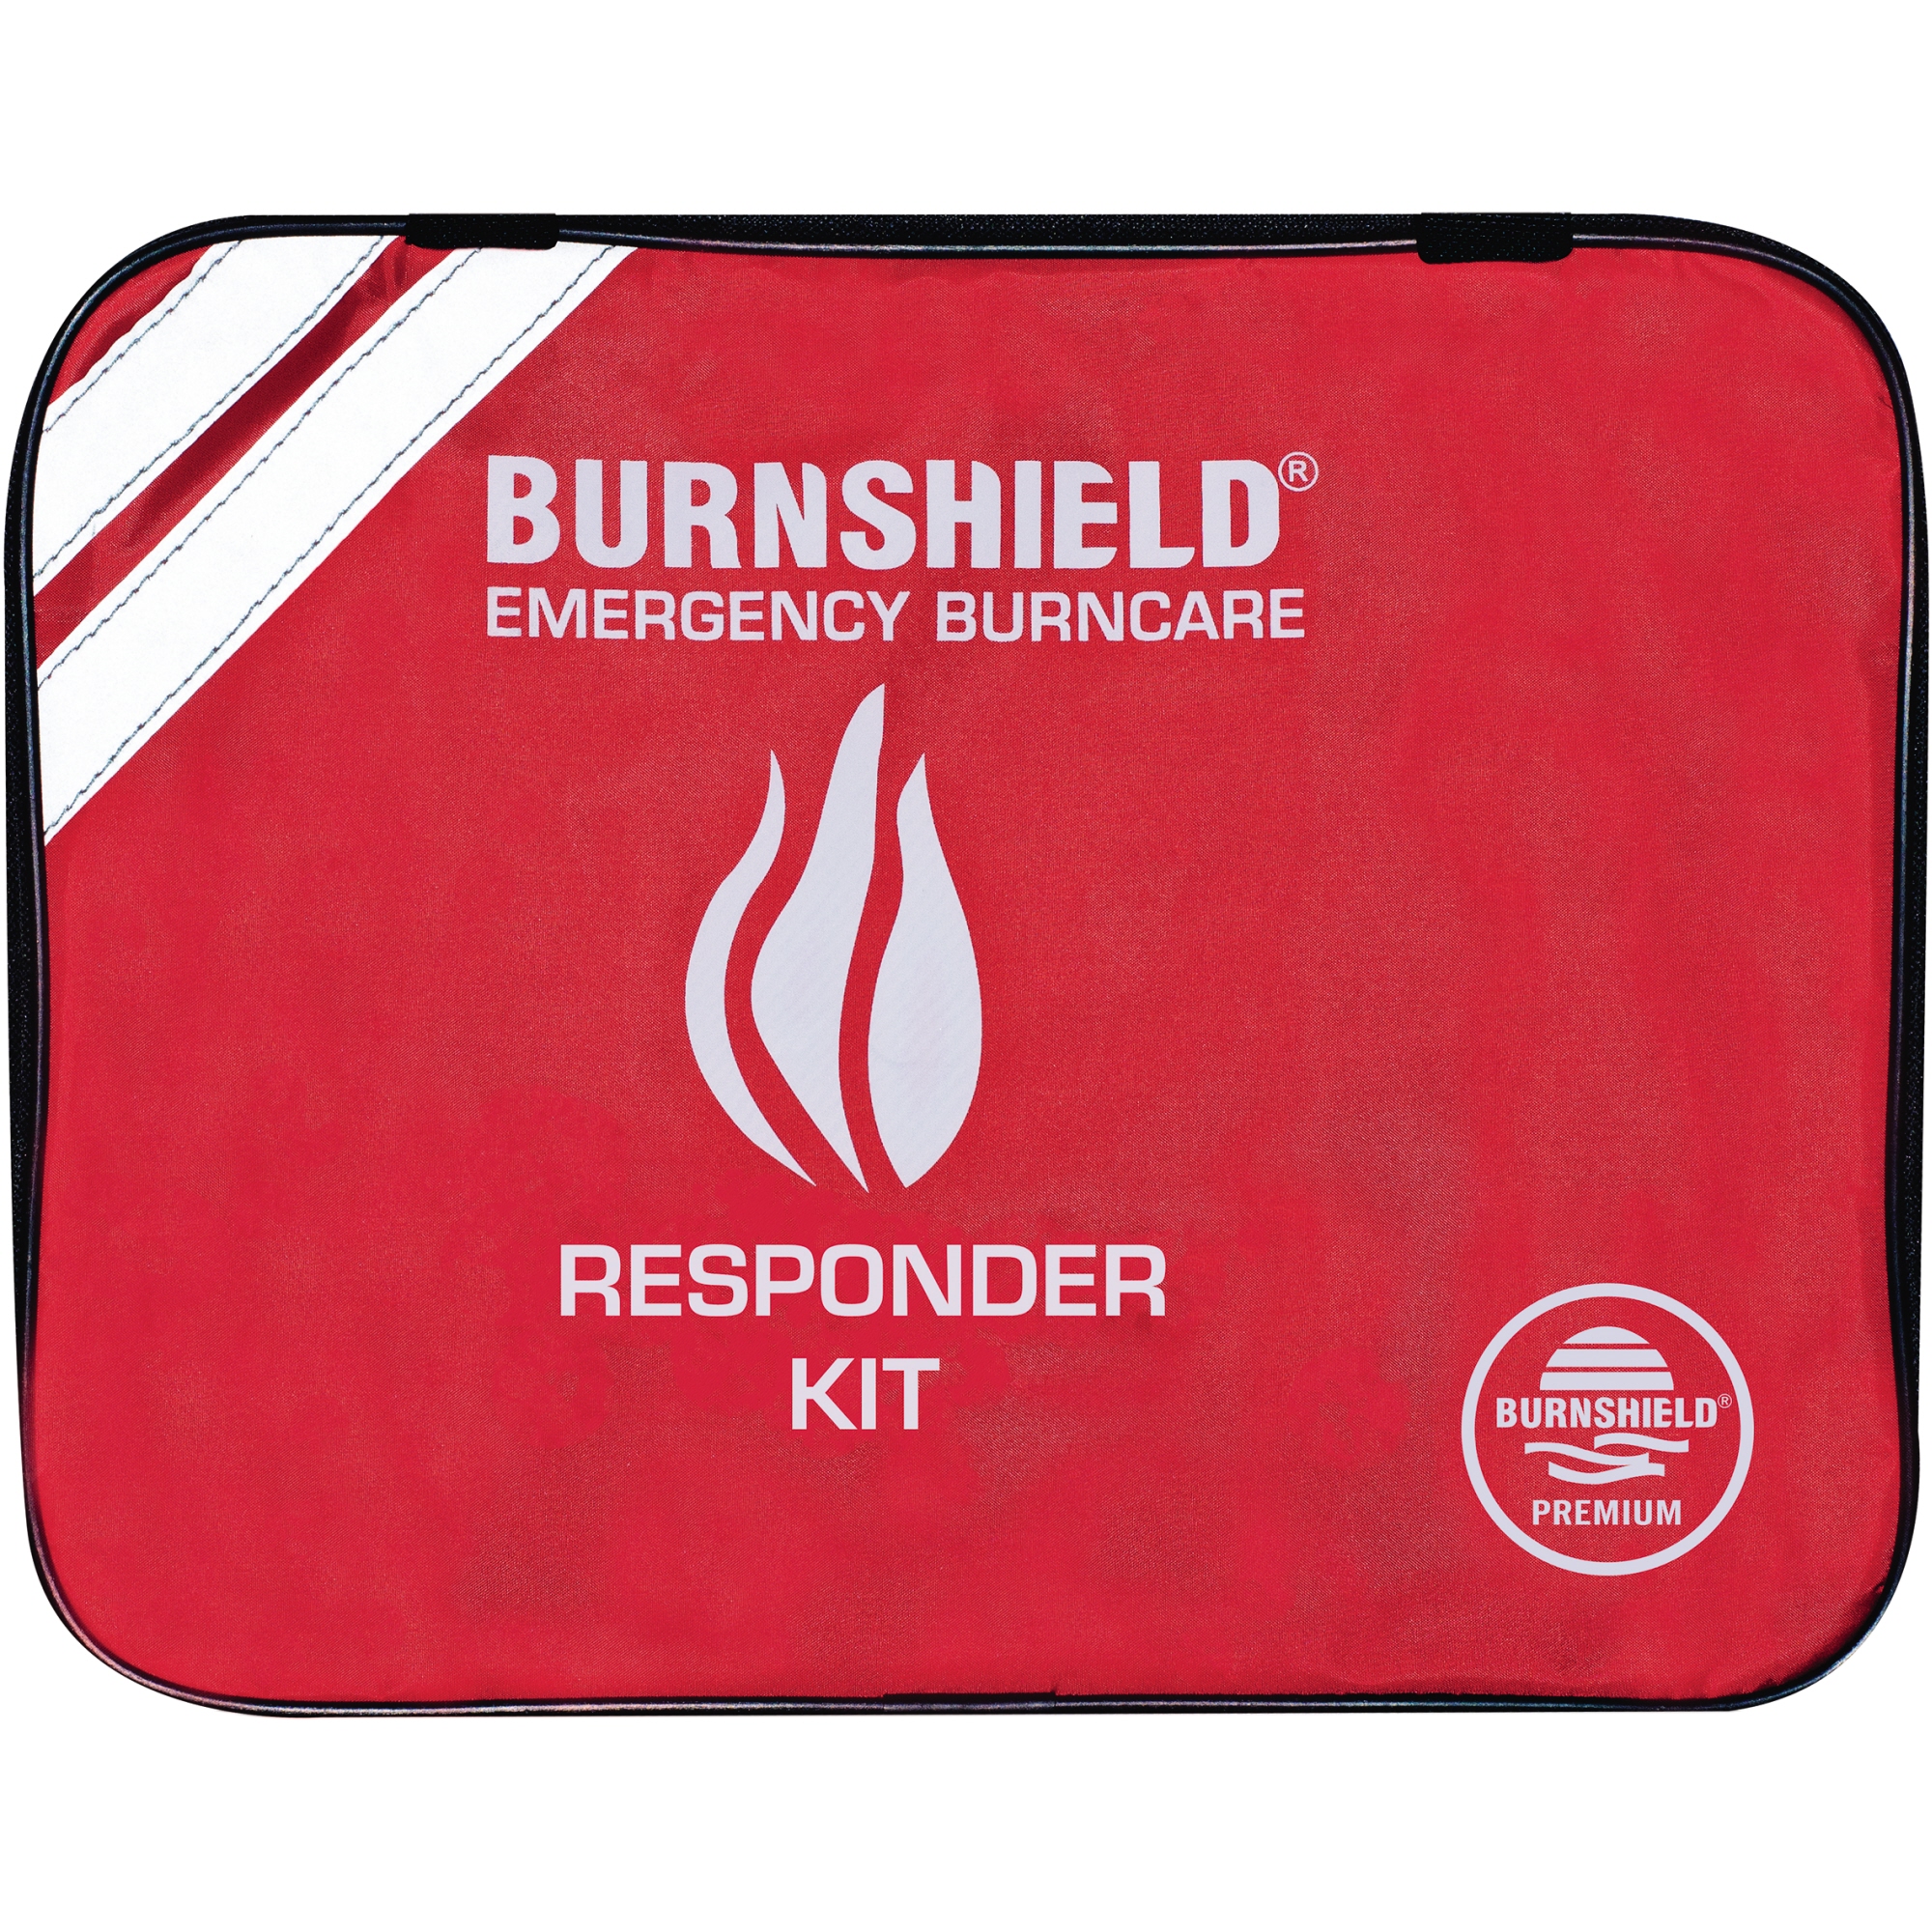 Burnshield Erste HilfeTasche EMERGENCY BURN CARE RESPONDER KIT